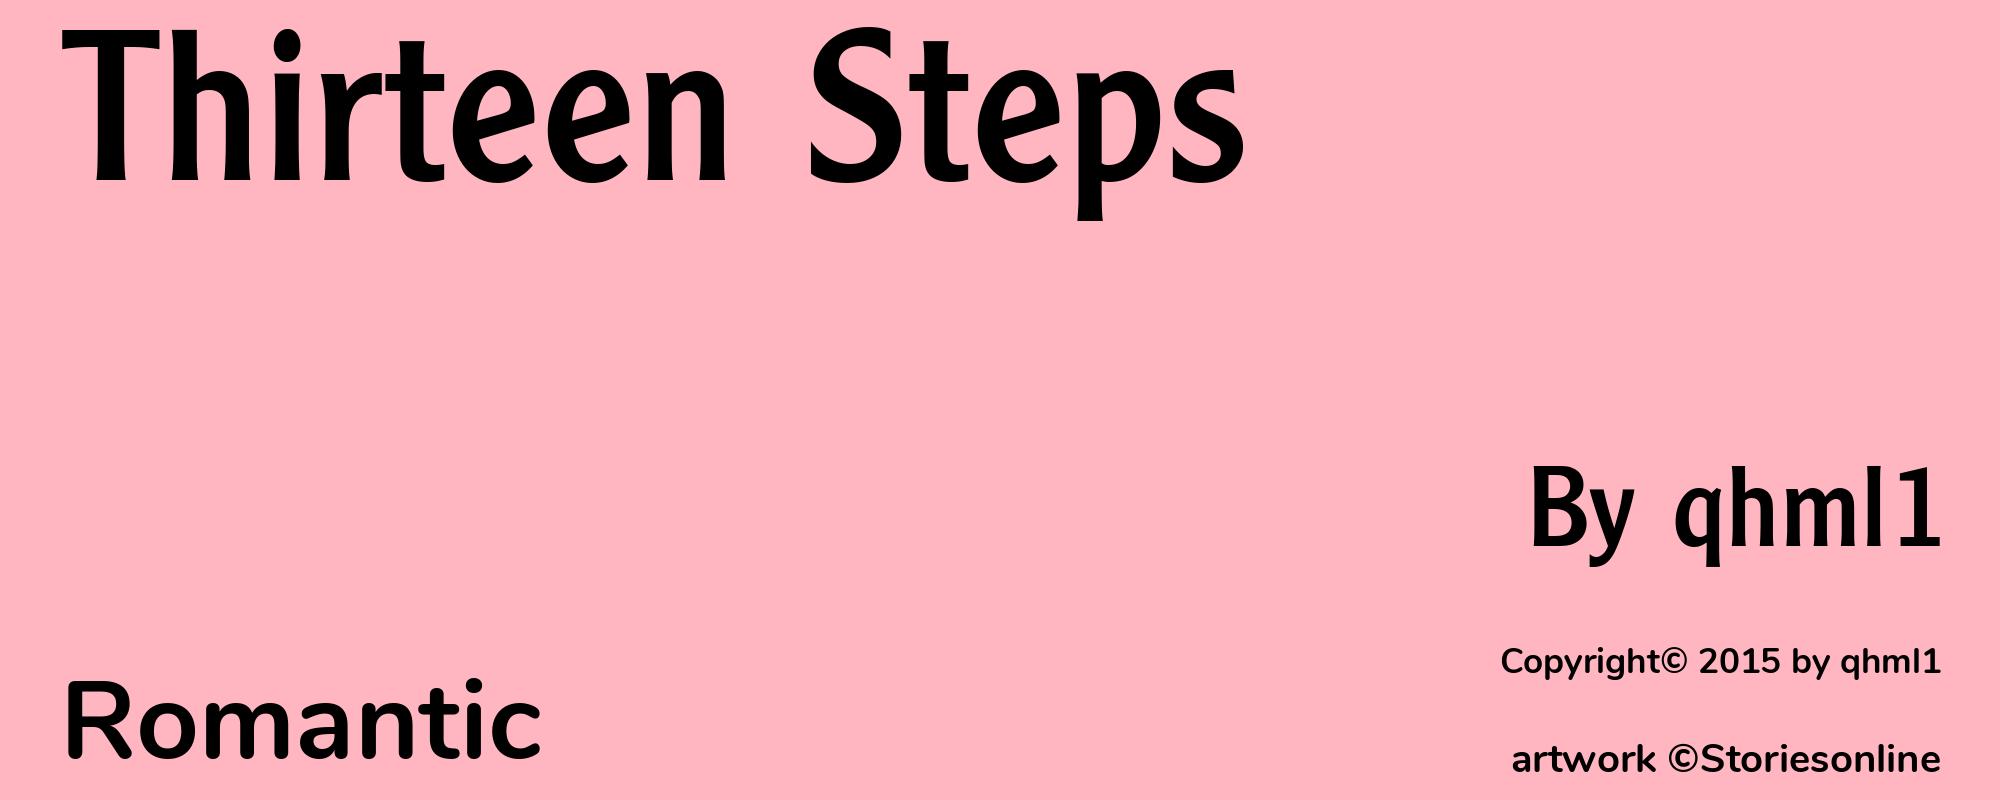 Thirteen Steps - Cover